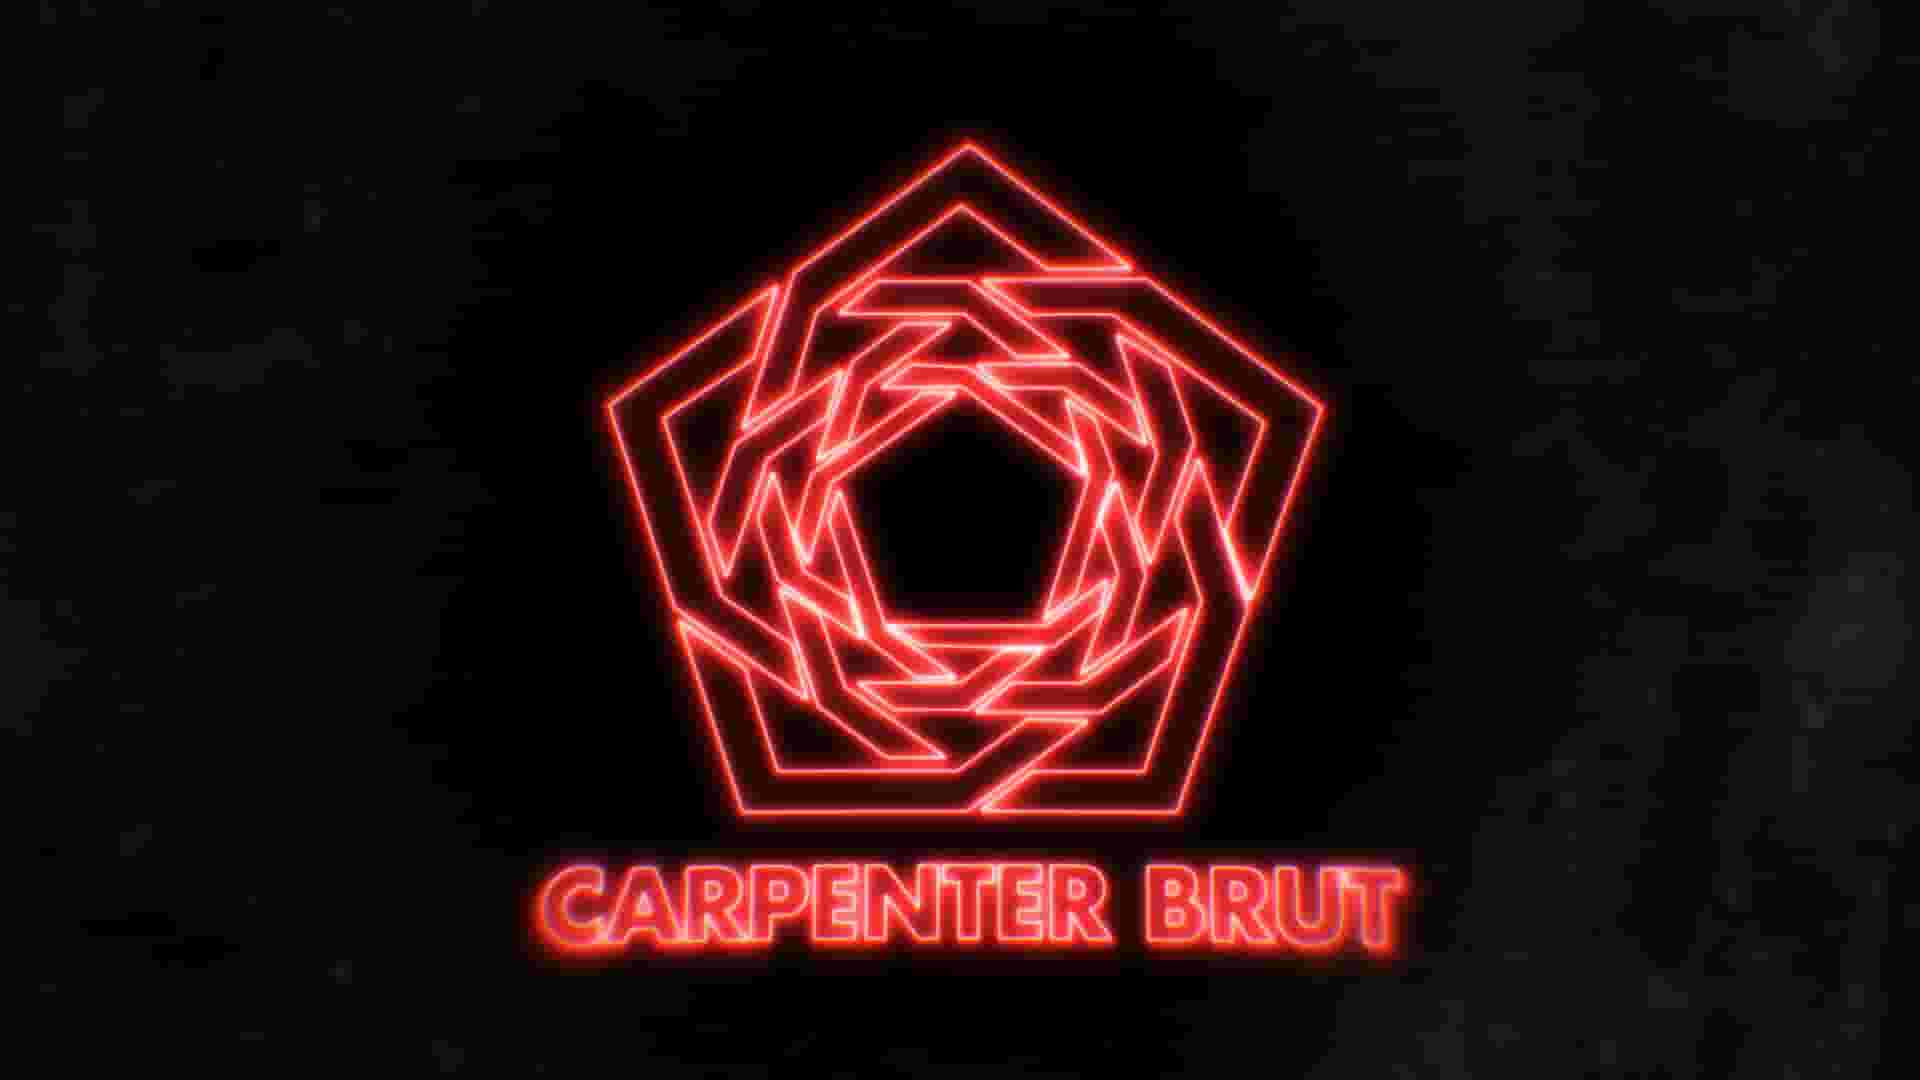 Who is Carpenter Brut?